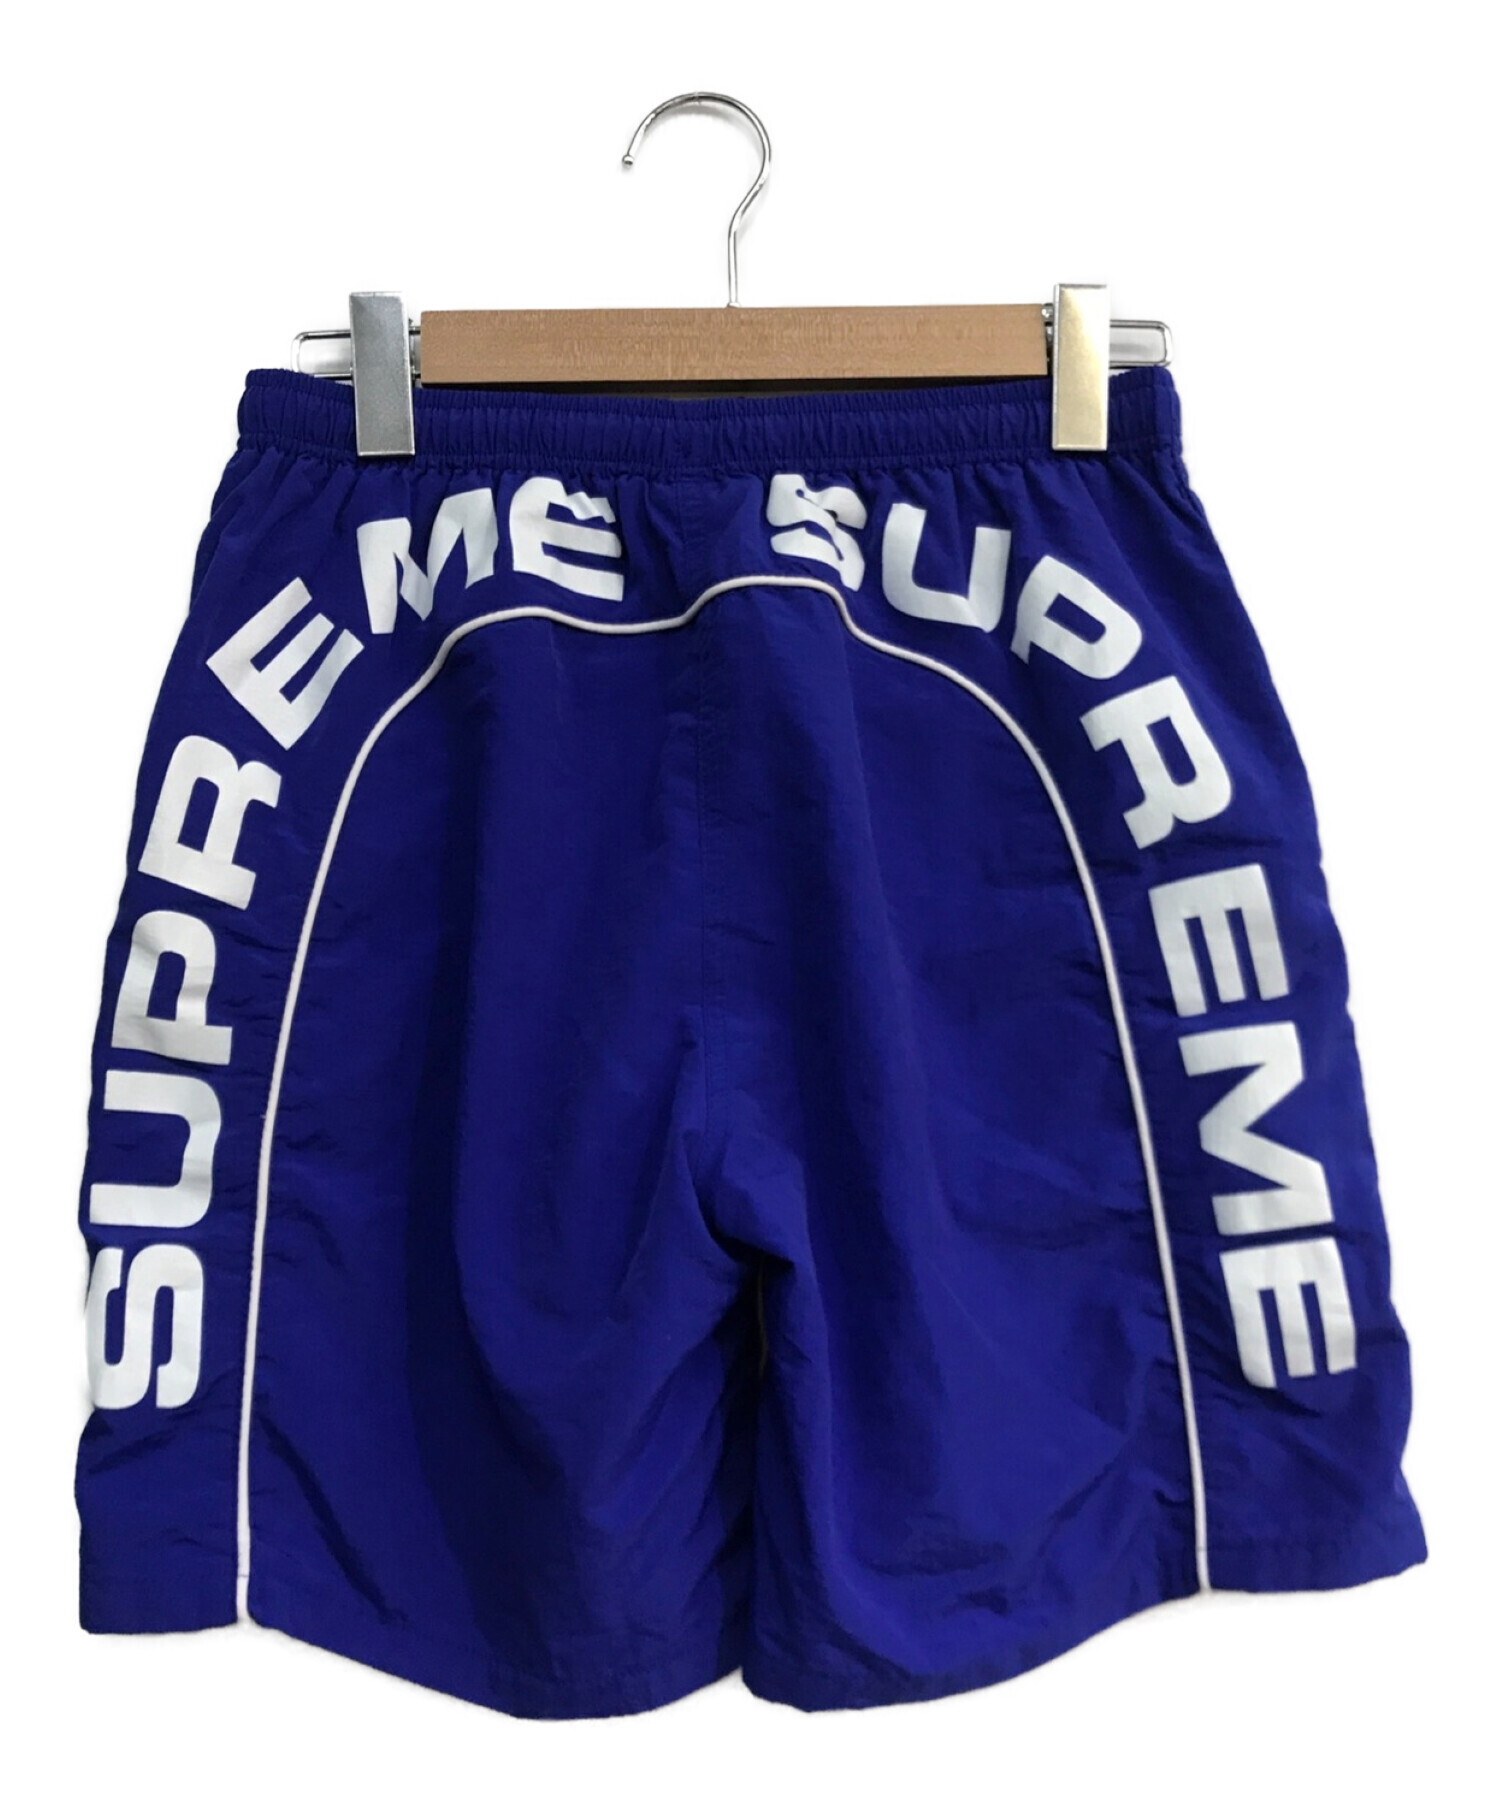 18S/S Supreme Arc Logo Water Short